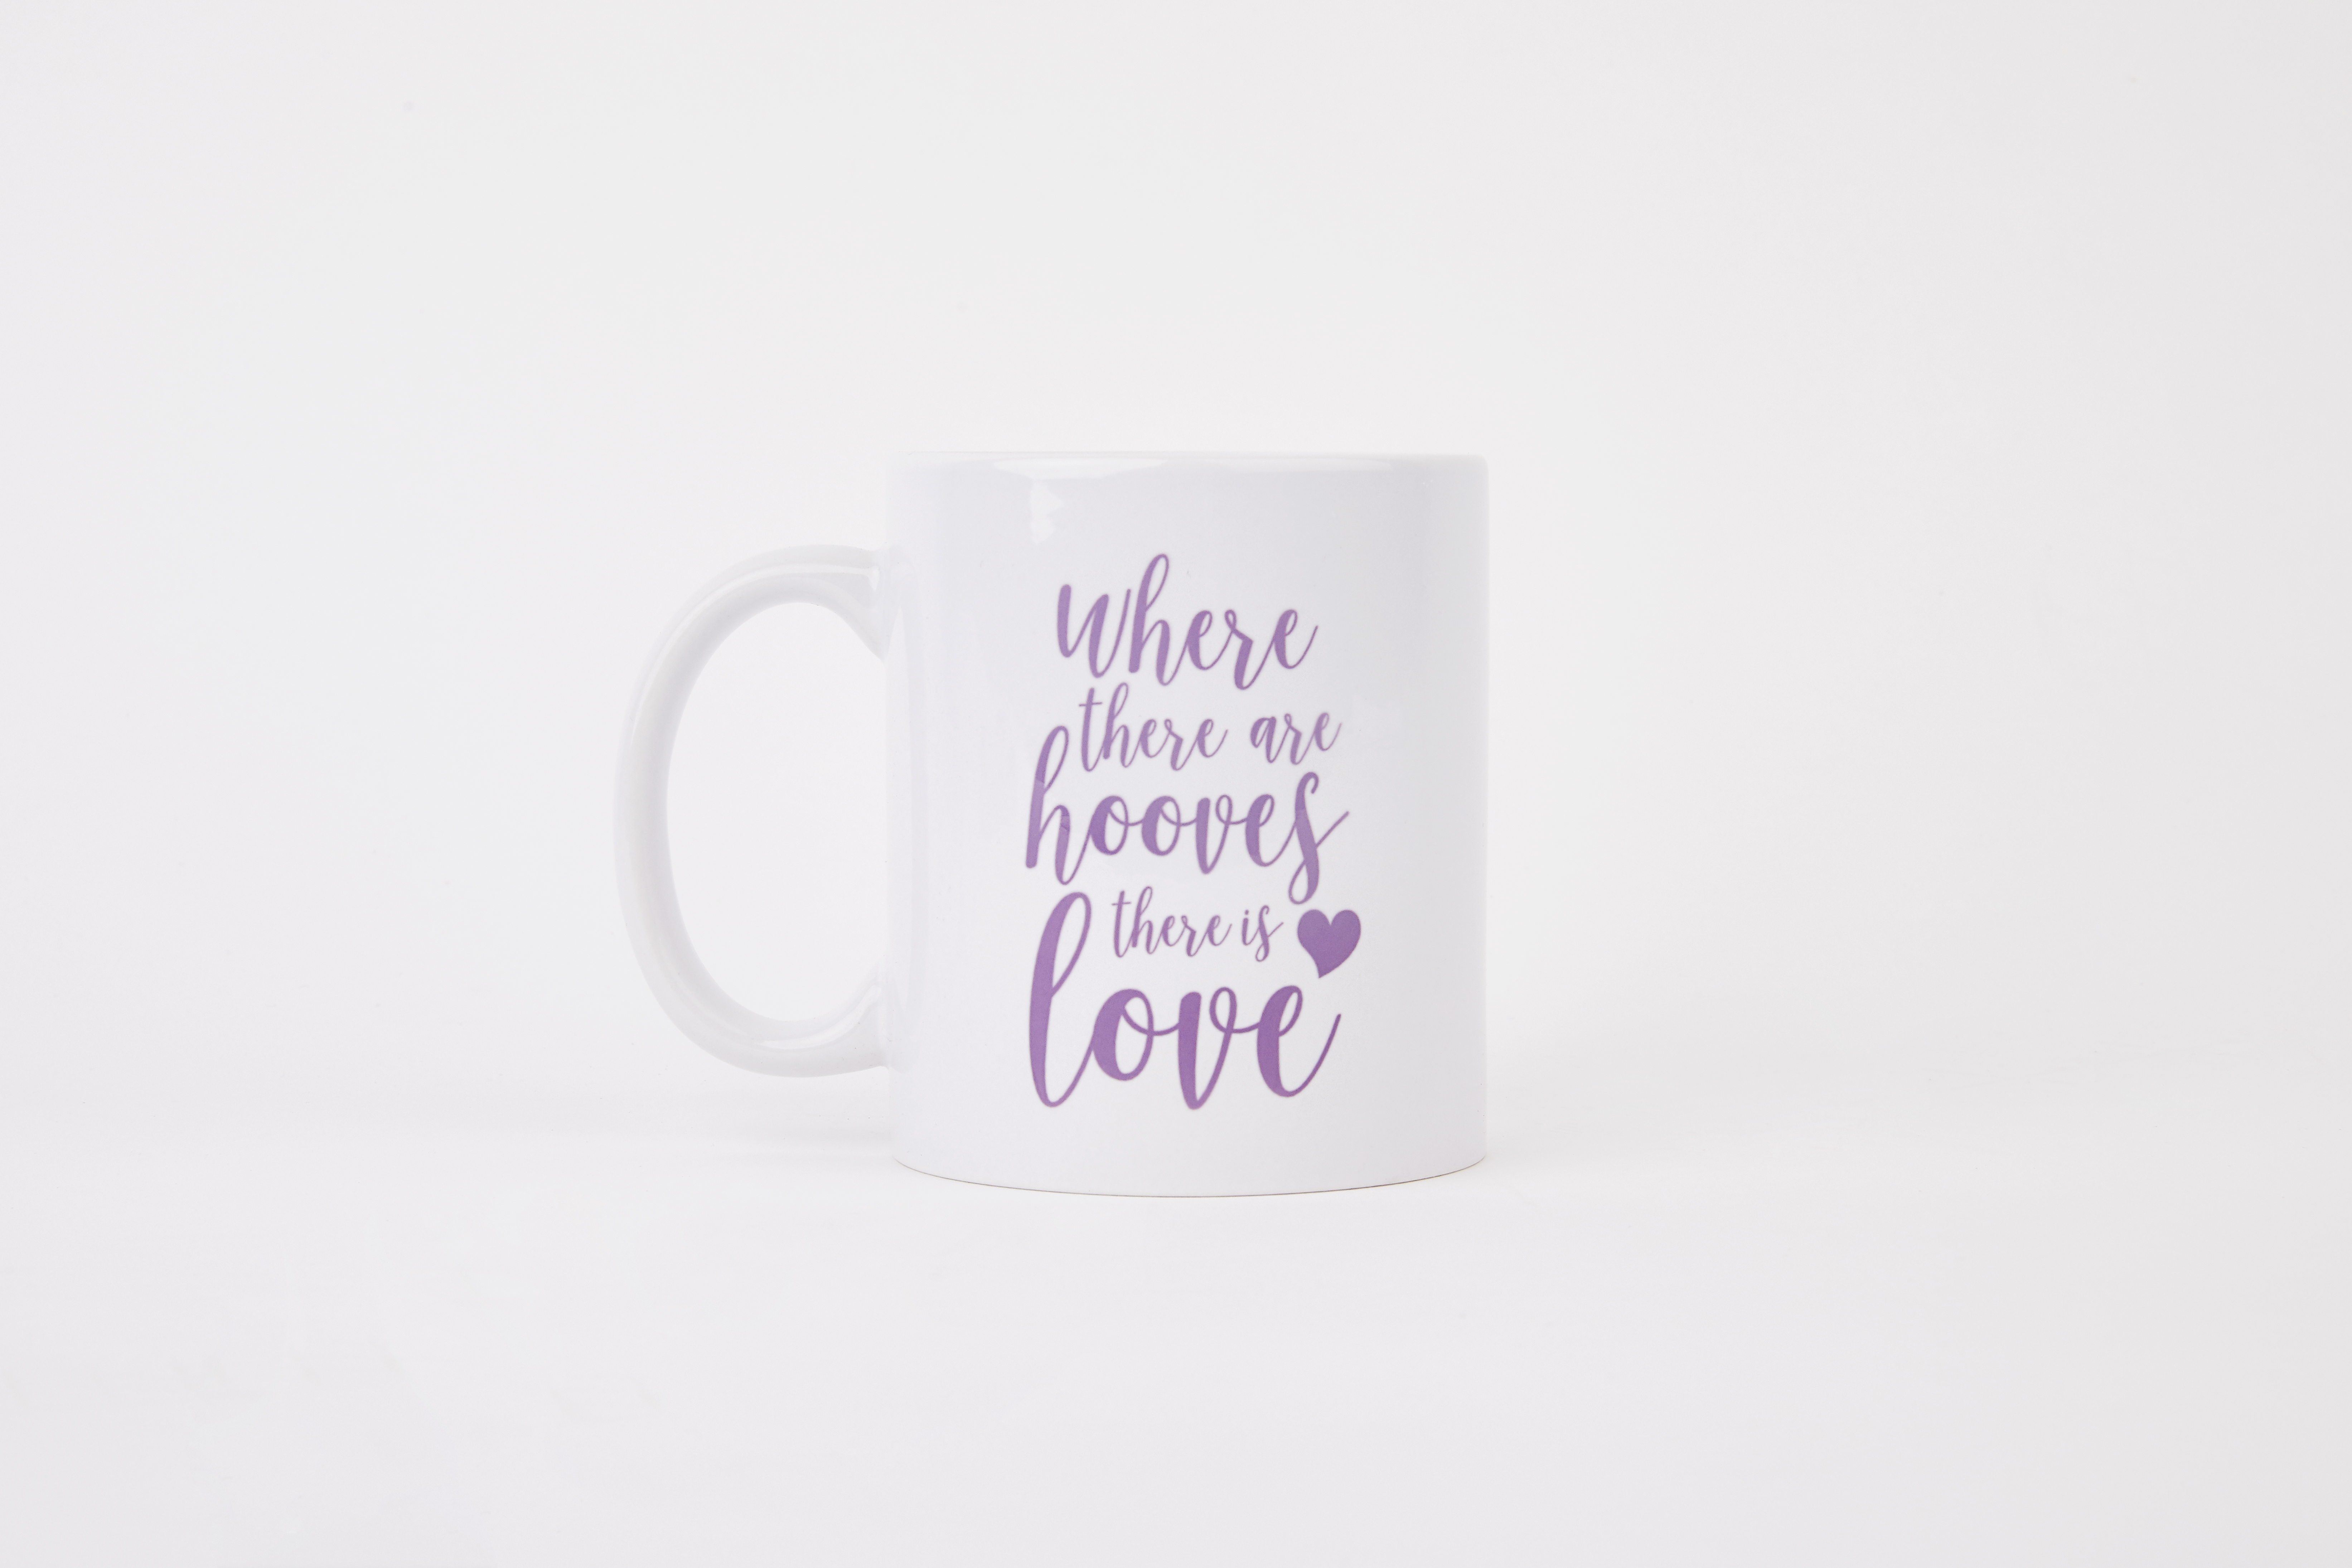 Hooves and love mug